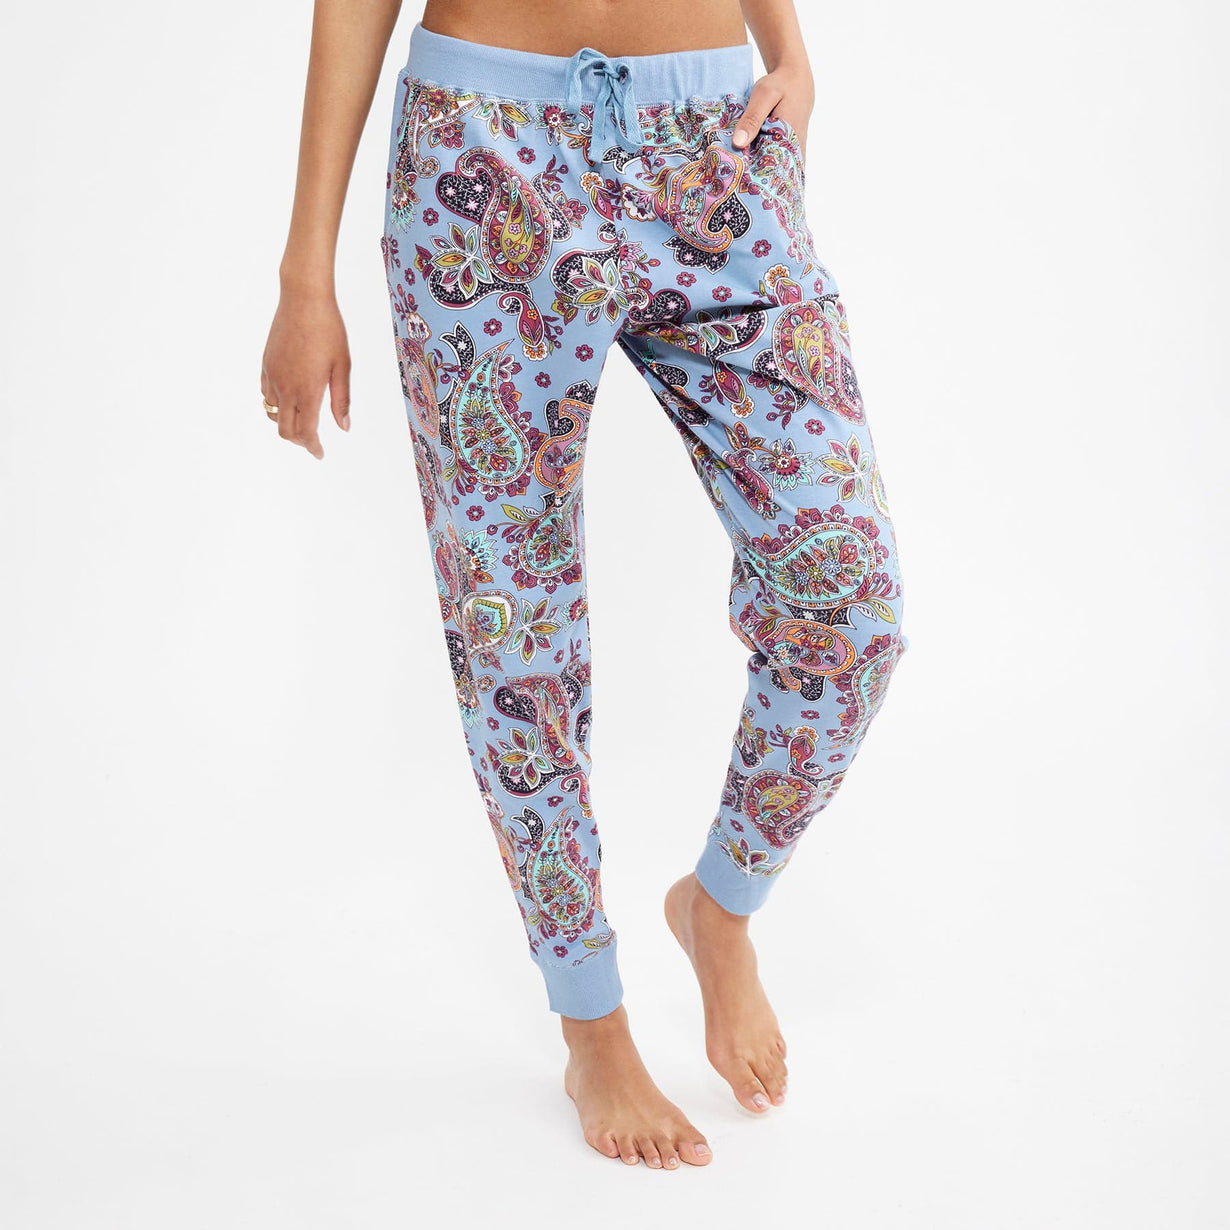 legs of model wearing vera bradley jogger pajama pants